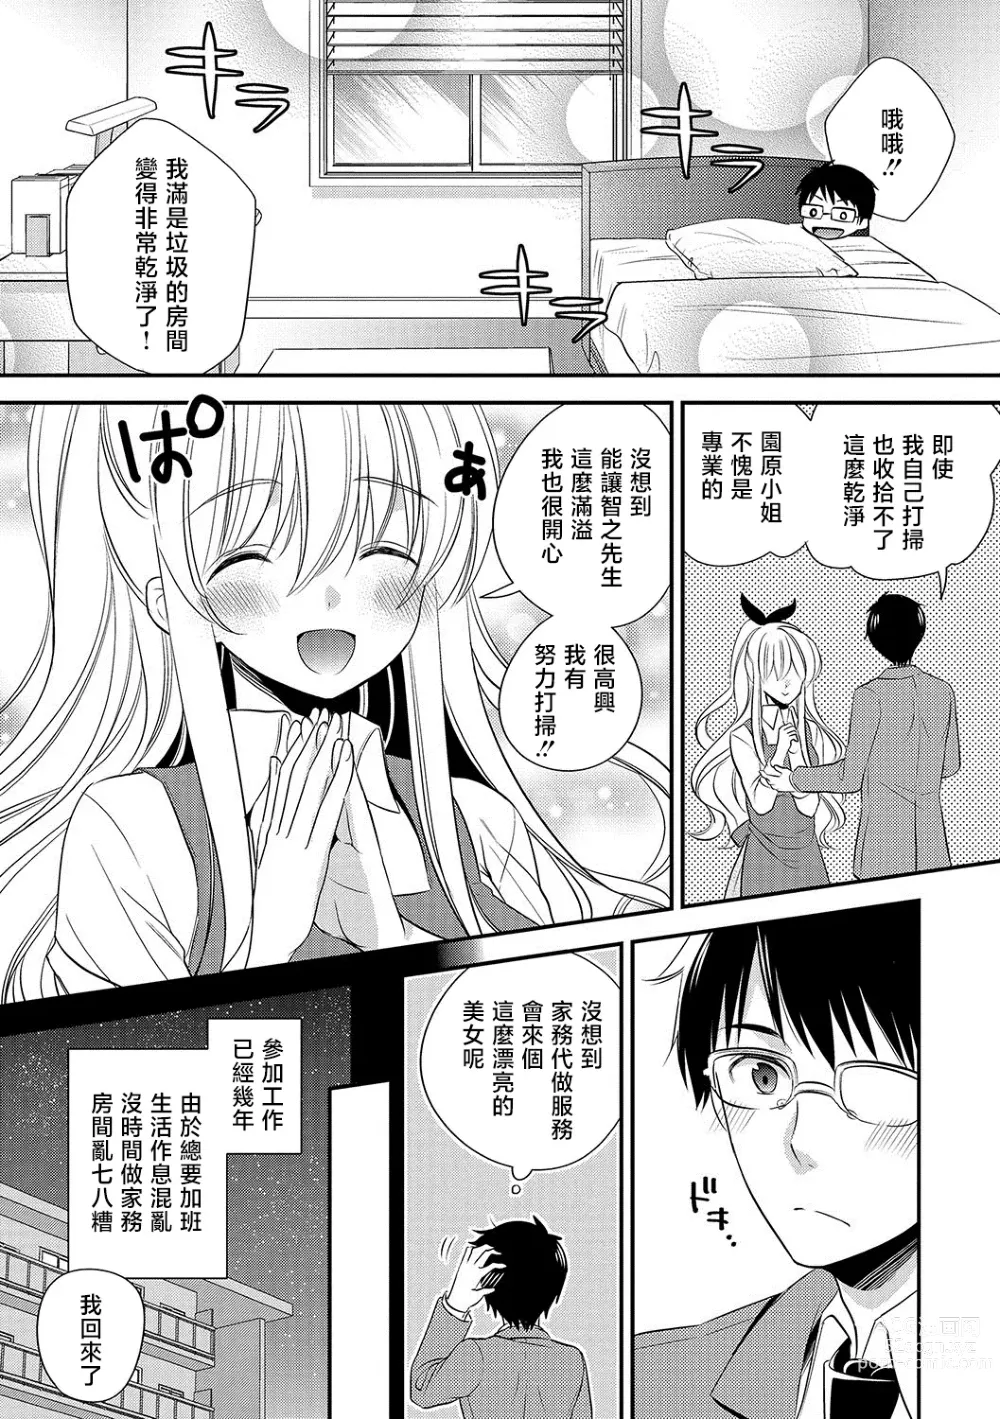 Page 2 of manga Kanojo no Aijou Manten Service